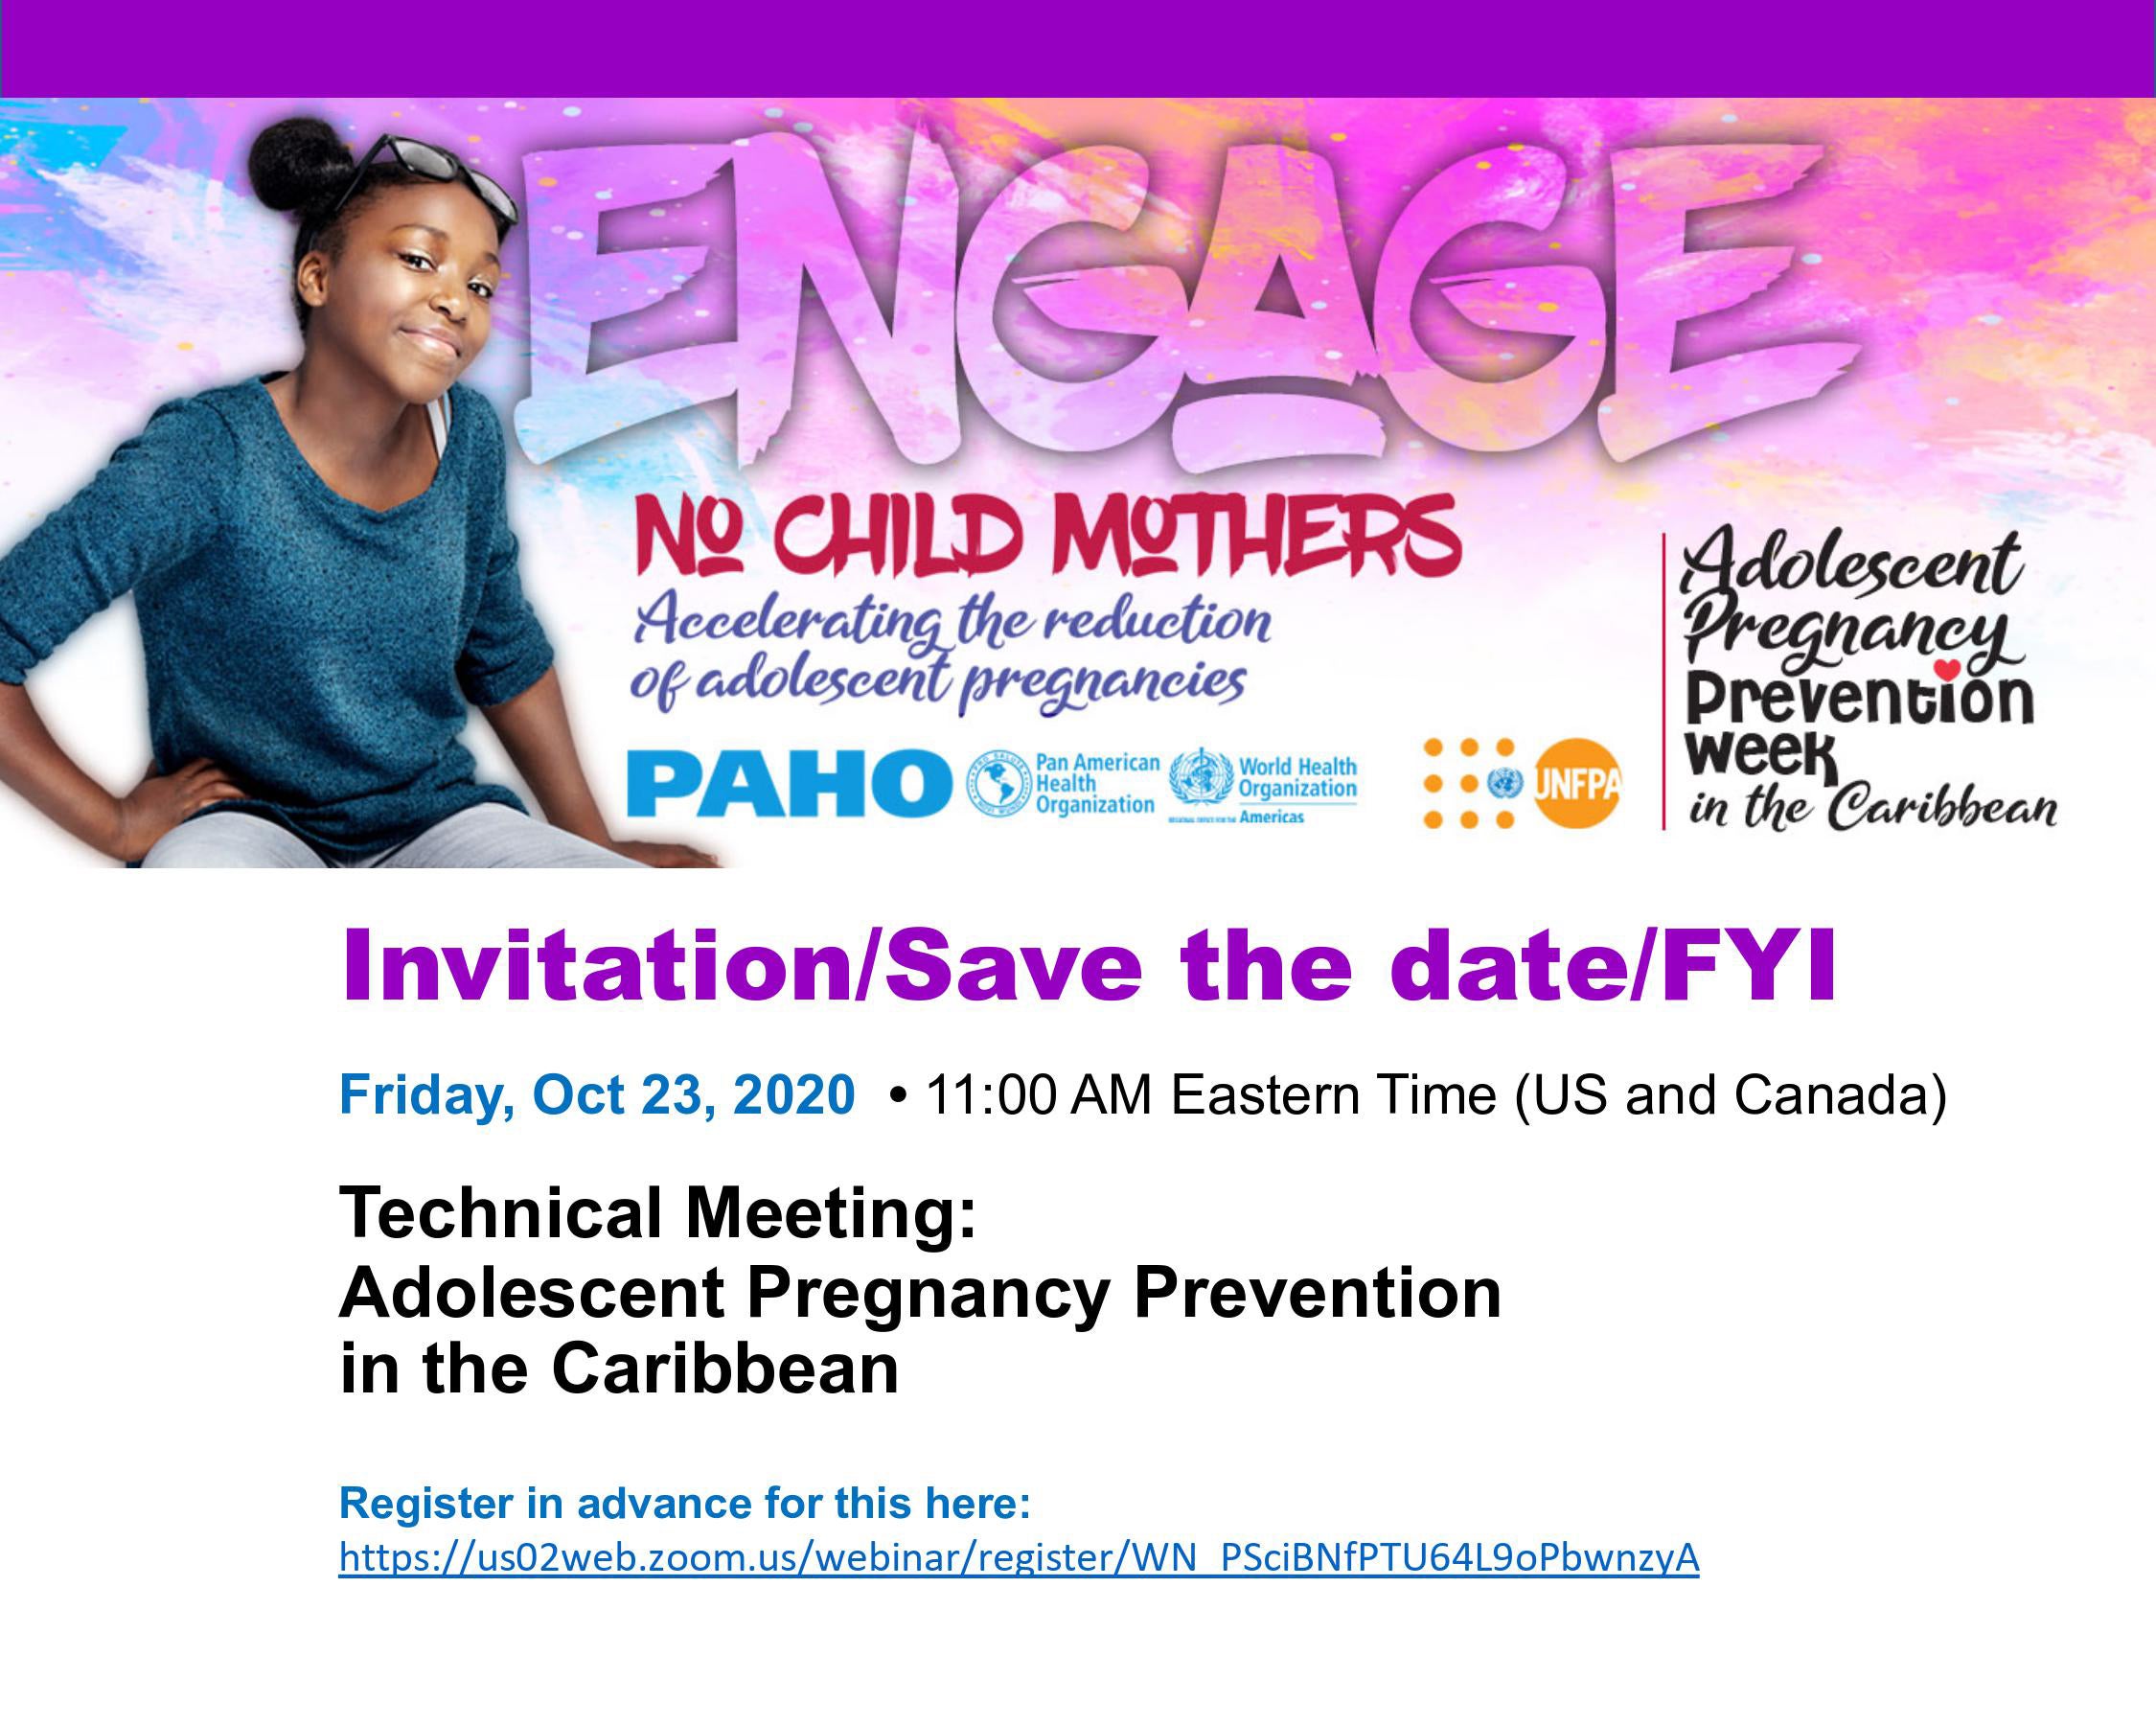 Adolescent Pregnancy Prevention Week - Dialogue